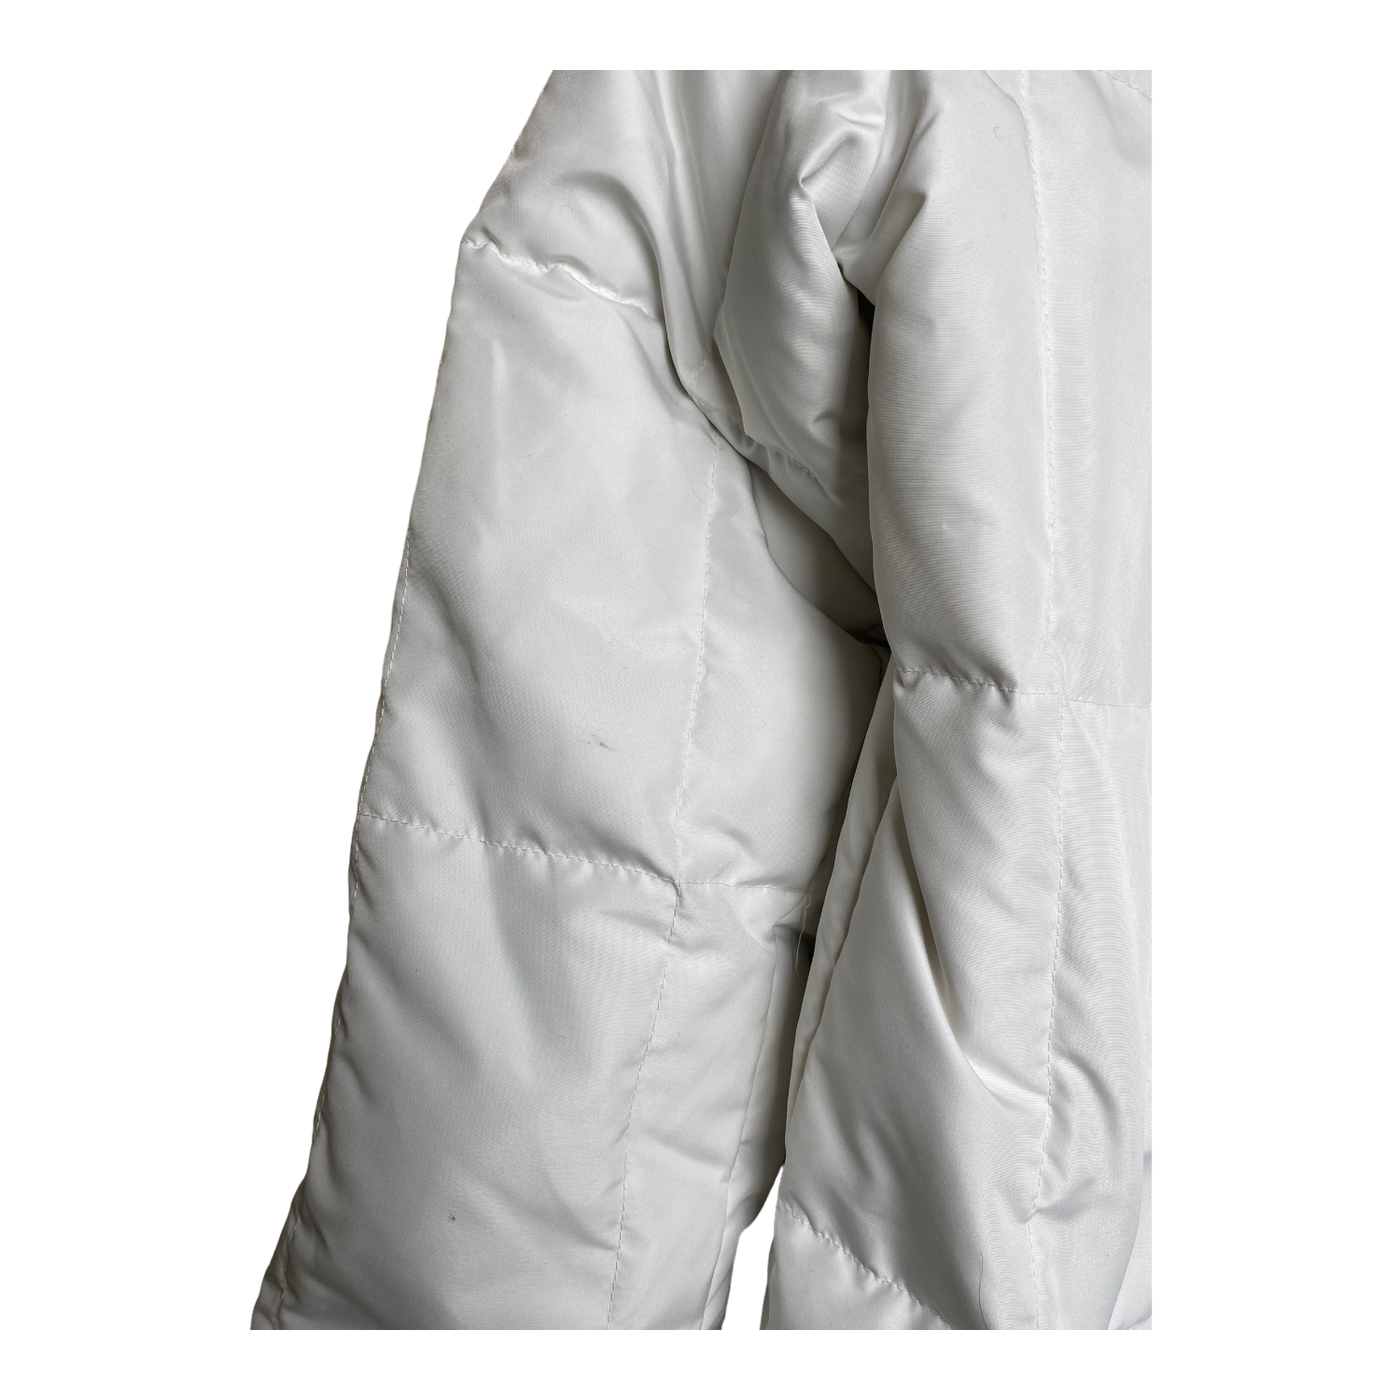 Joutsen alison jacket, white | woman S